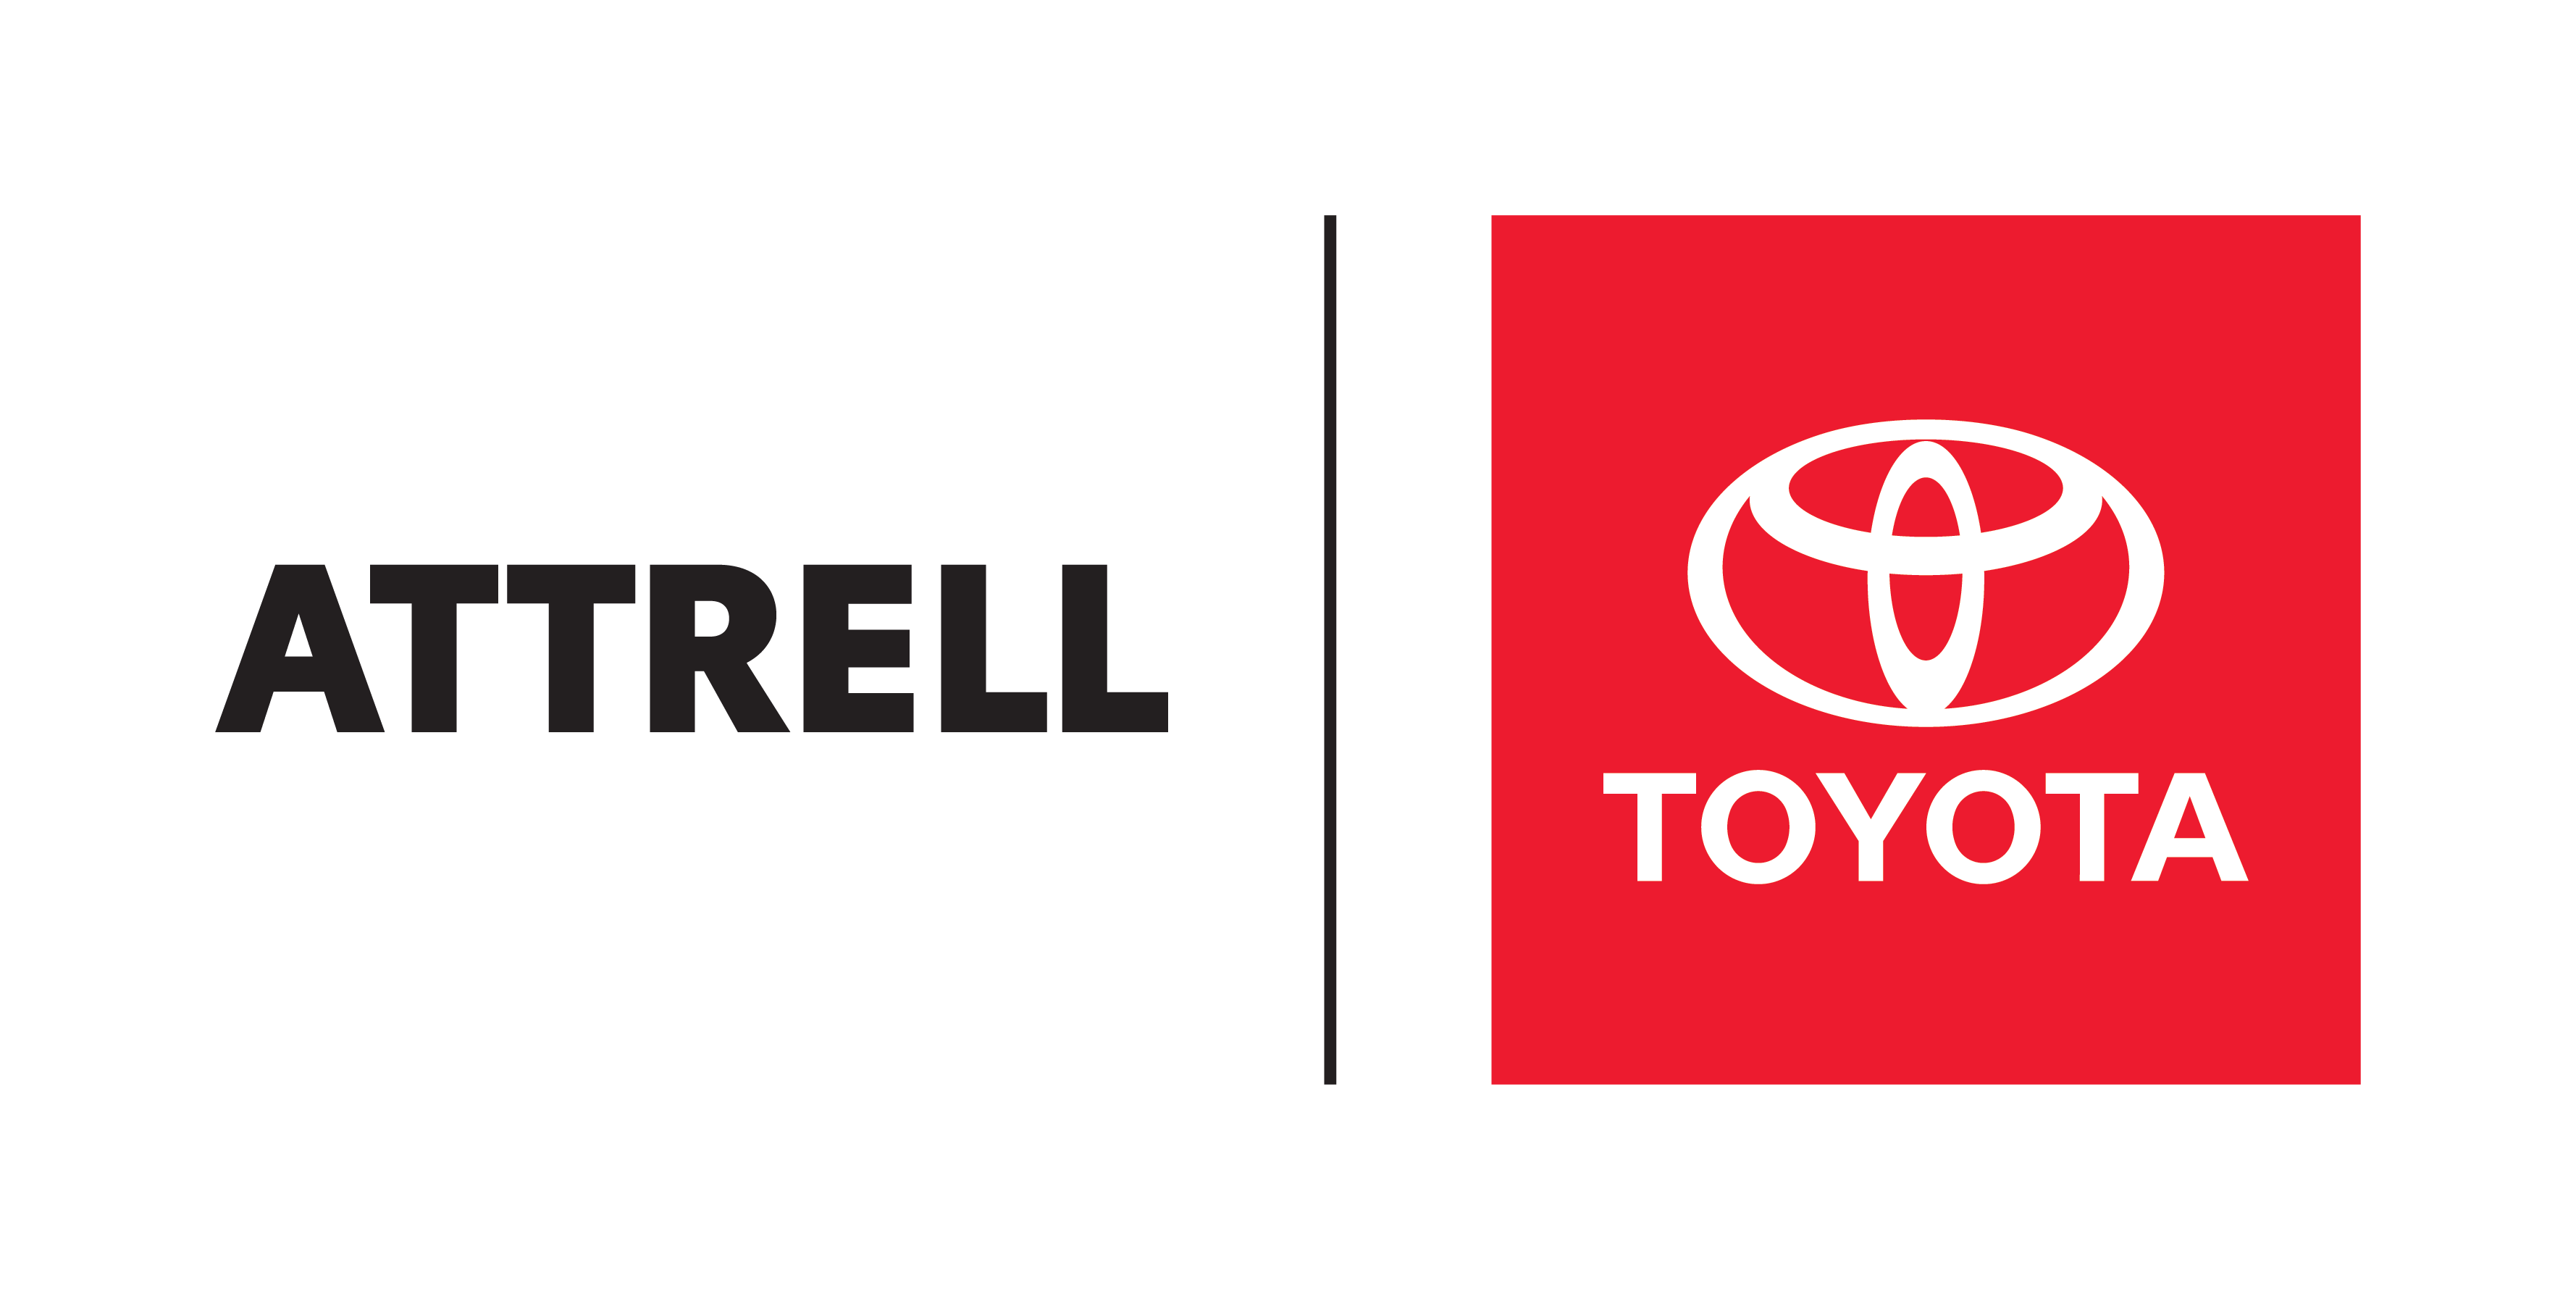 Attrell Toyota